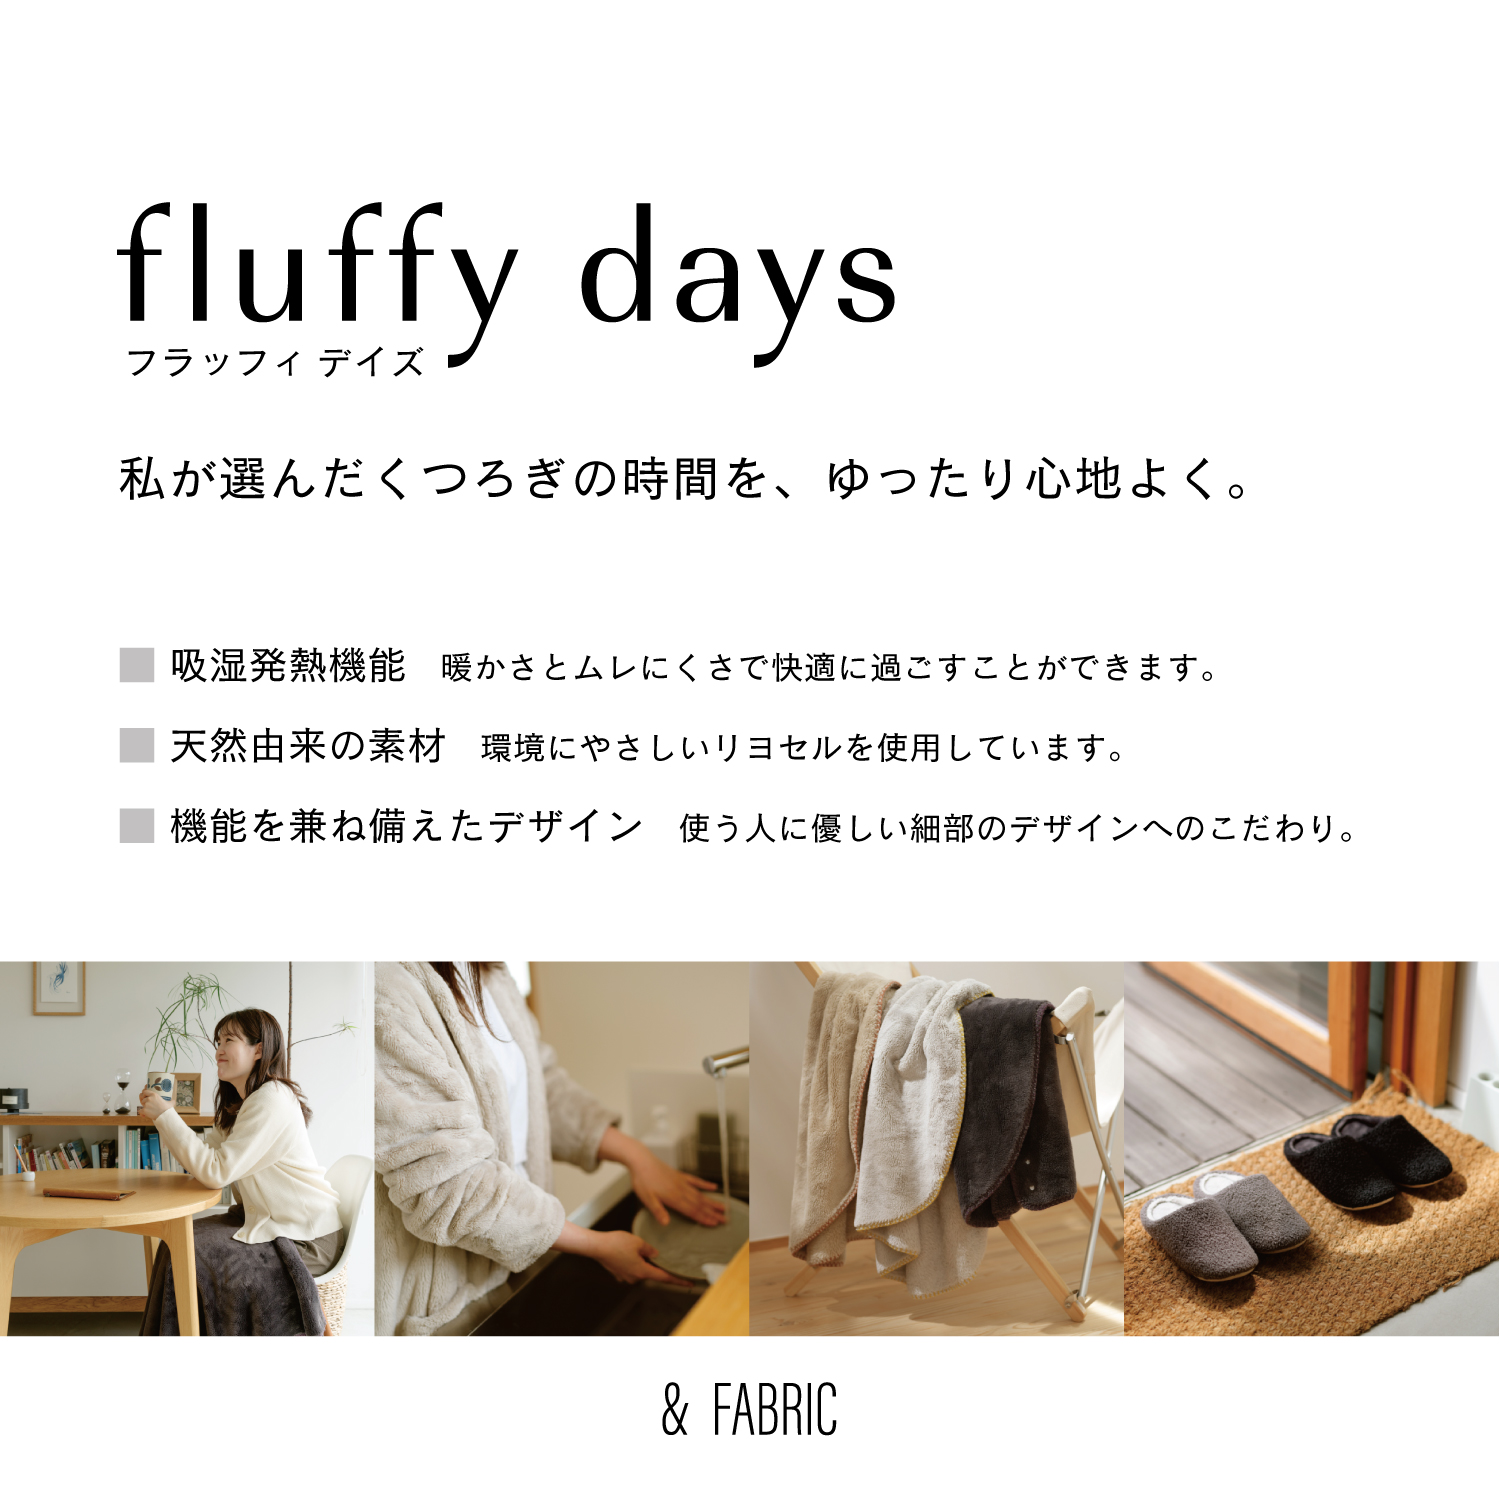 fluffy days